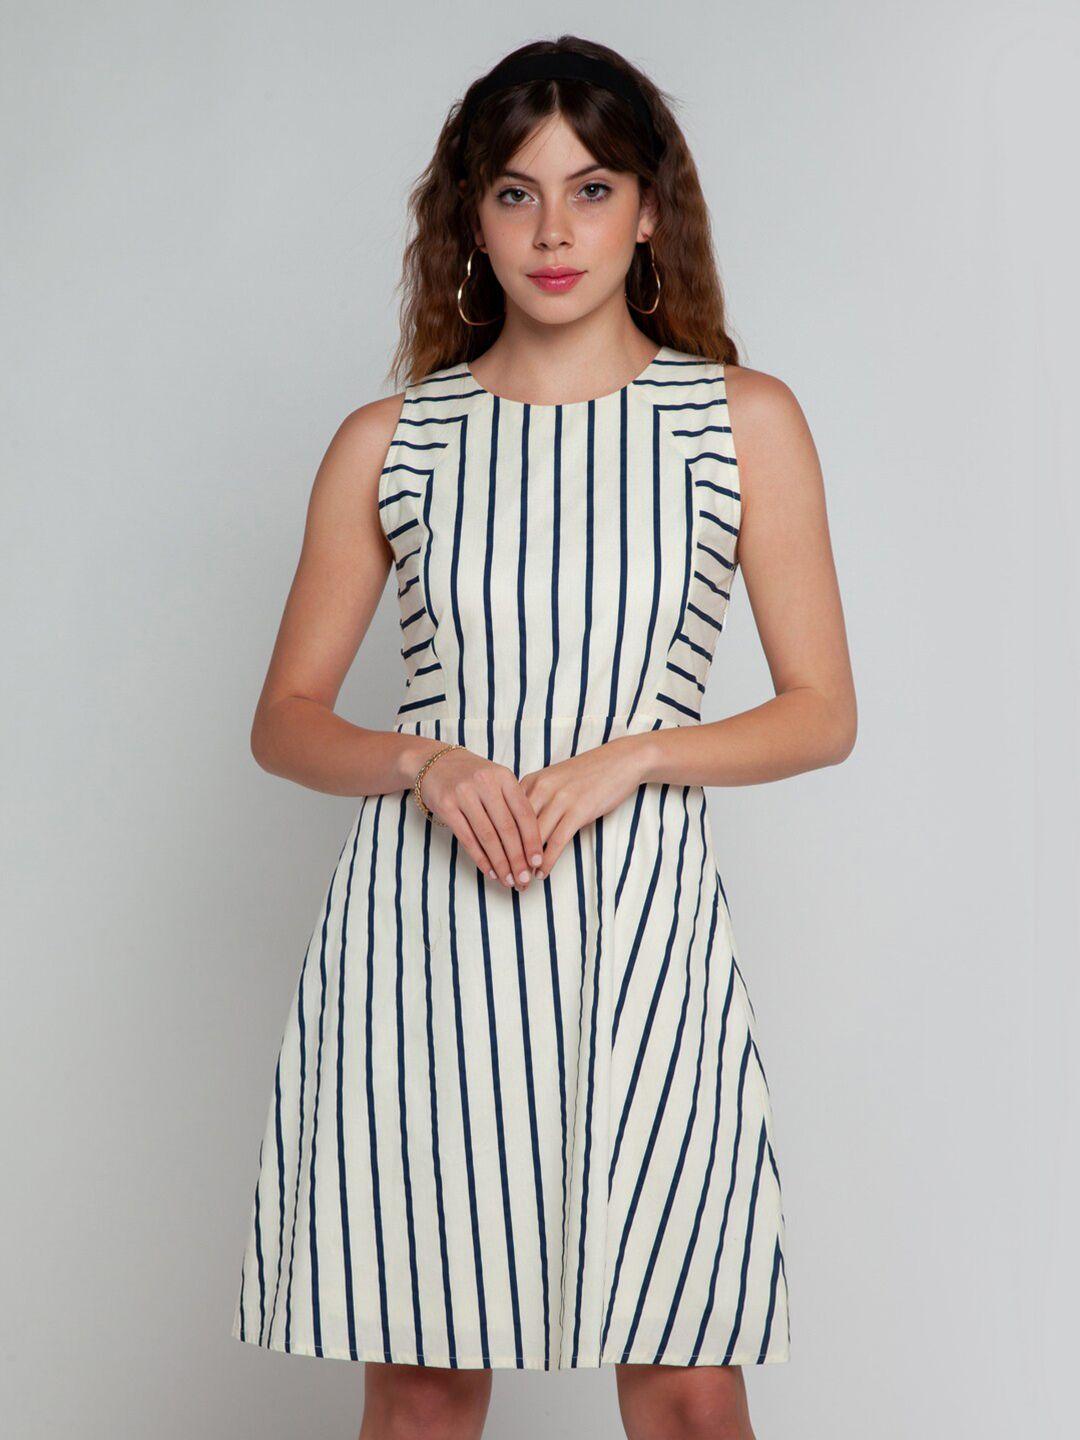 zink london white striped dress